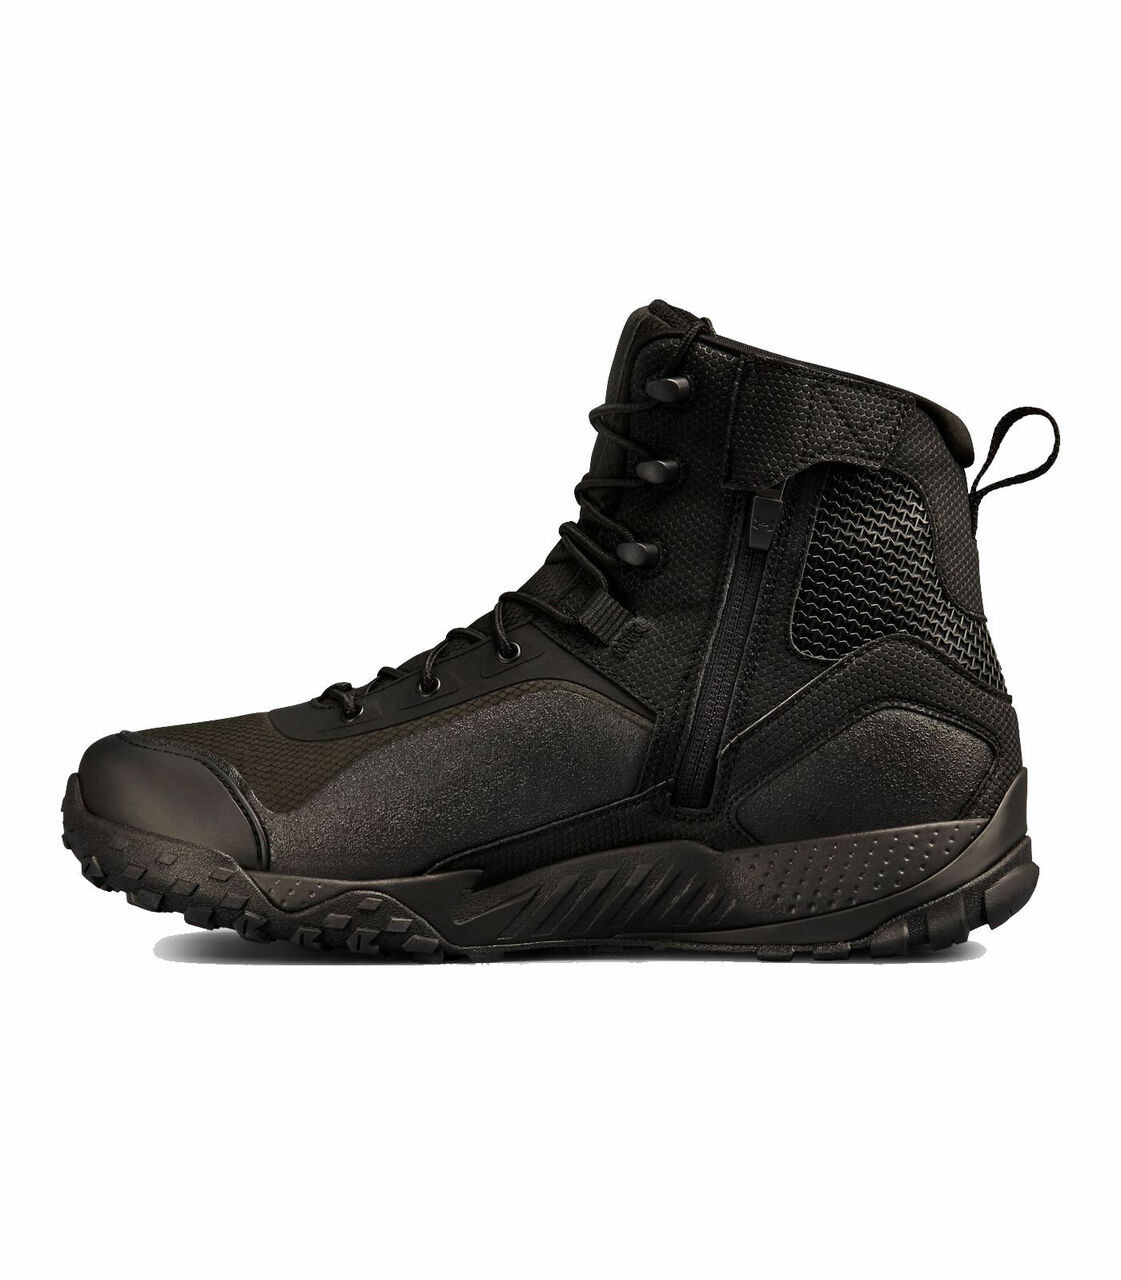 Under Armour Valsetz Tactical Boots - Black 1224003